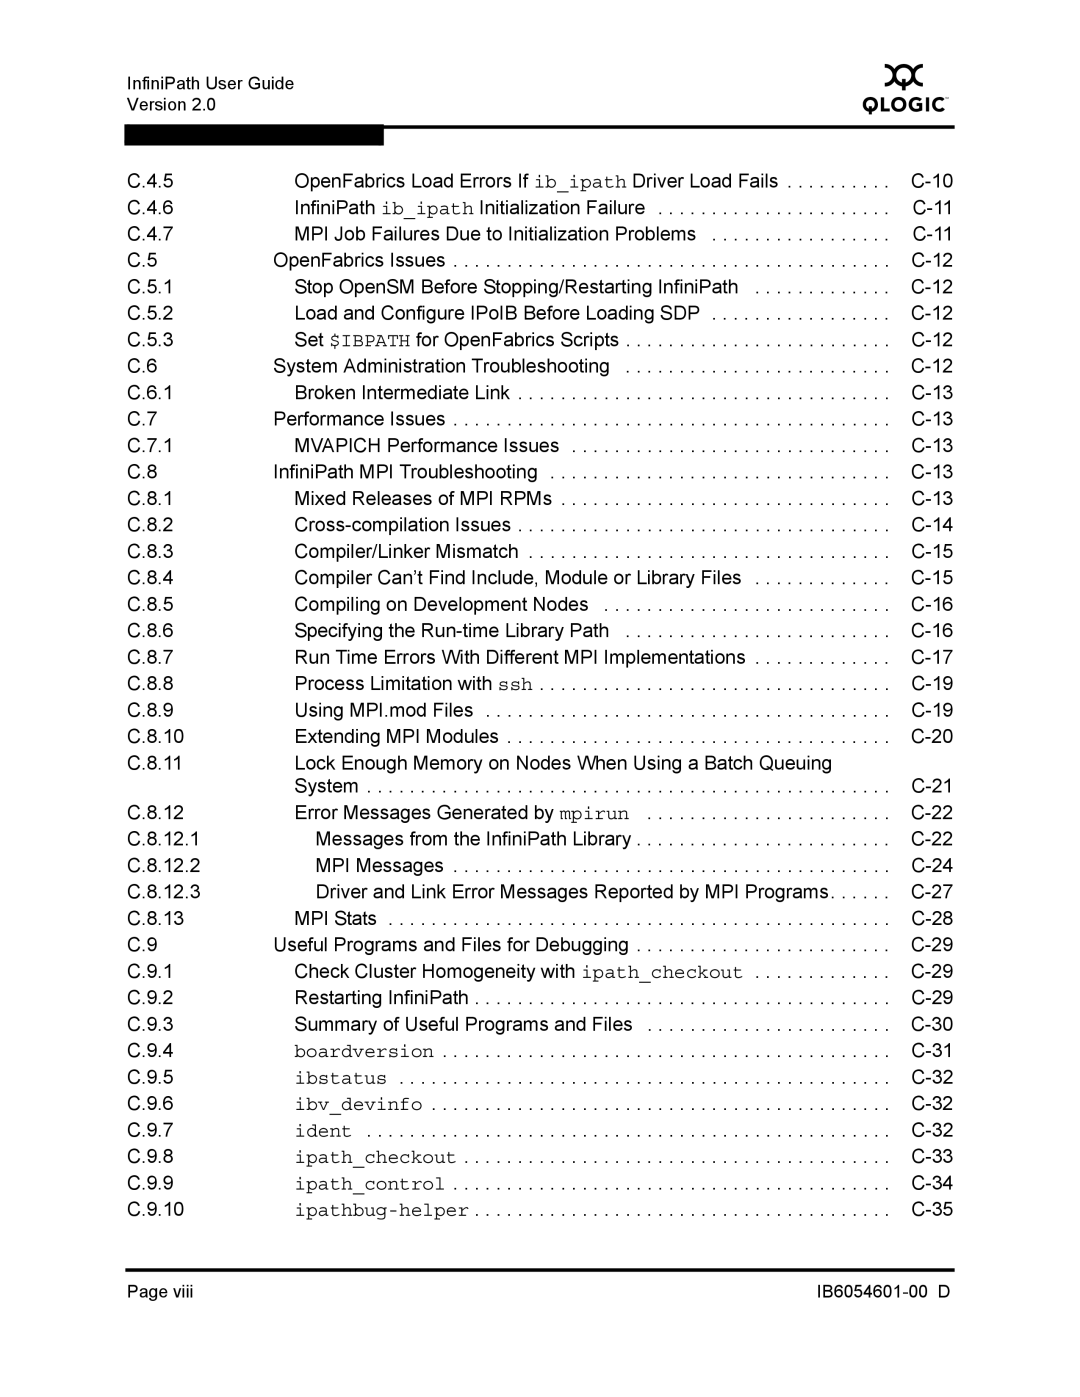 Q-Logic IB6054601-00 D manual InfiniPath User Guide Version 